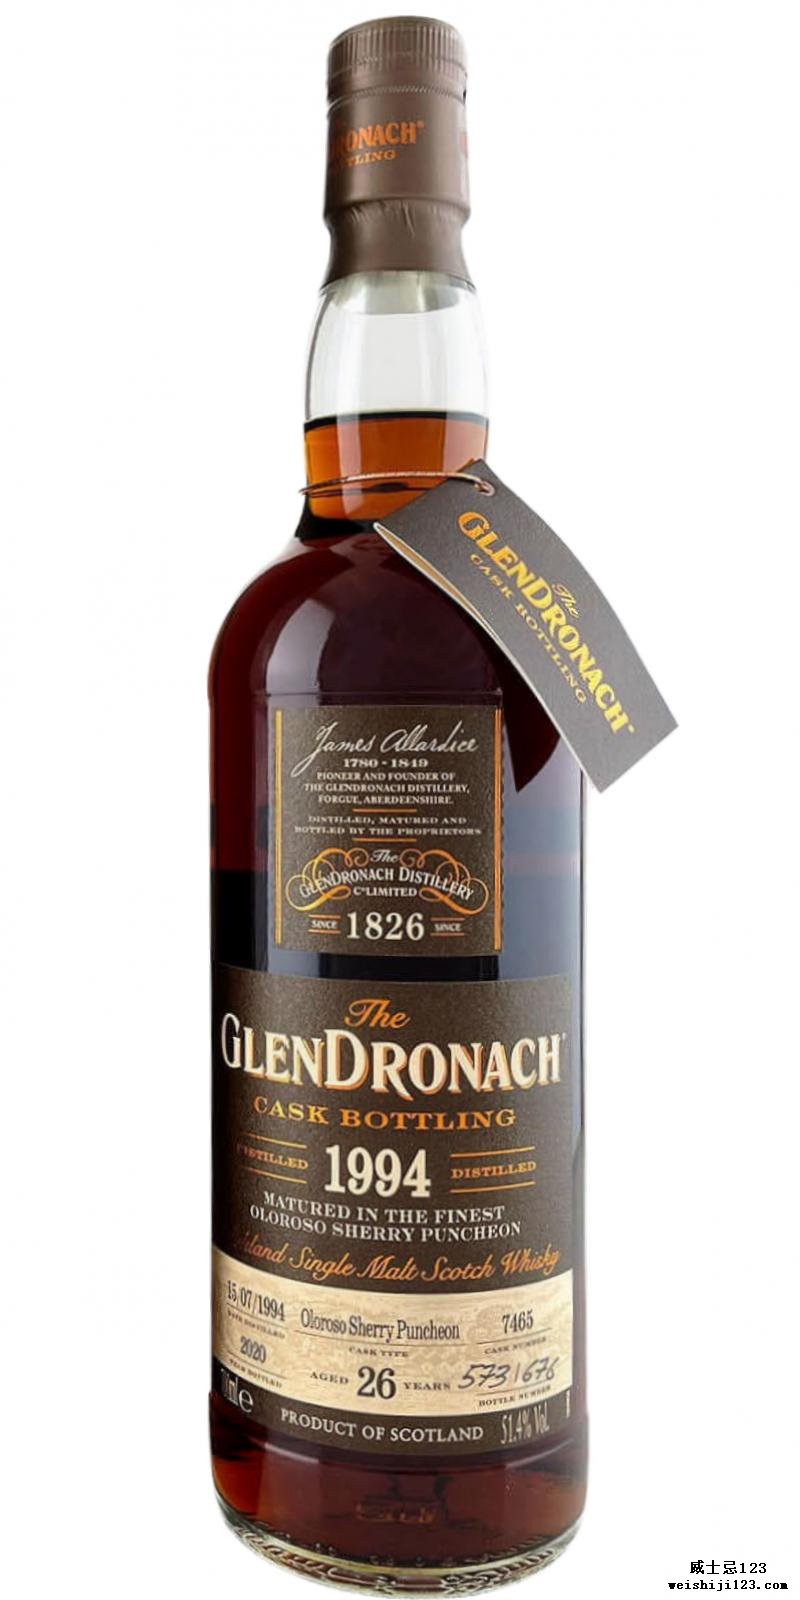 Glendronach 1994